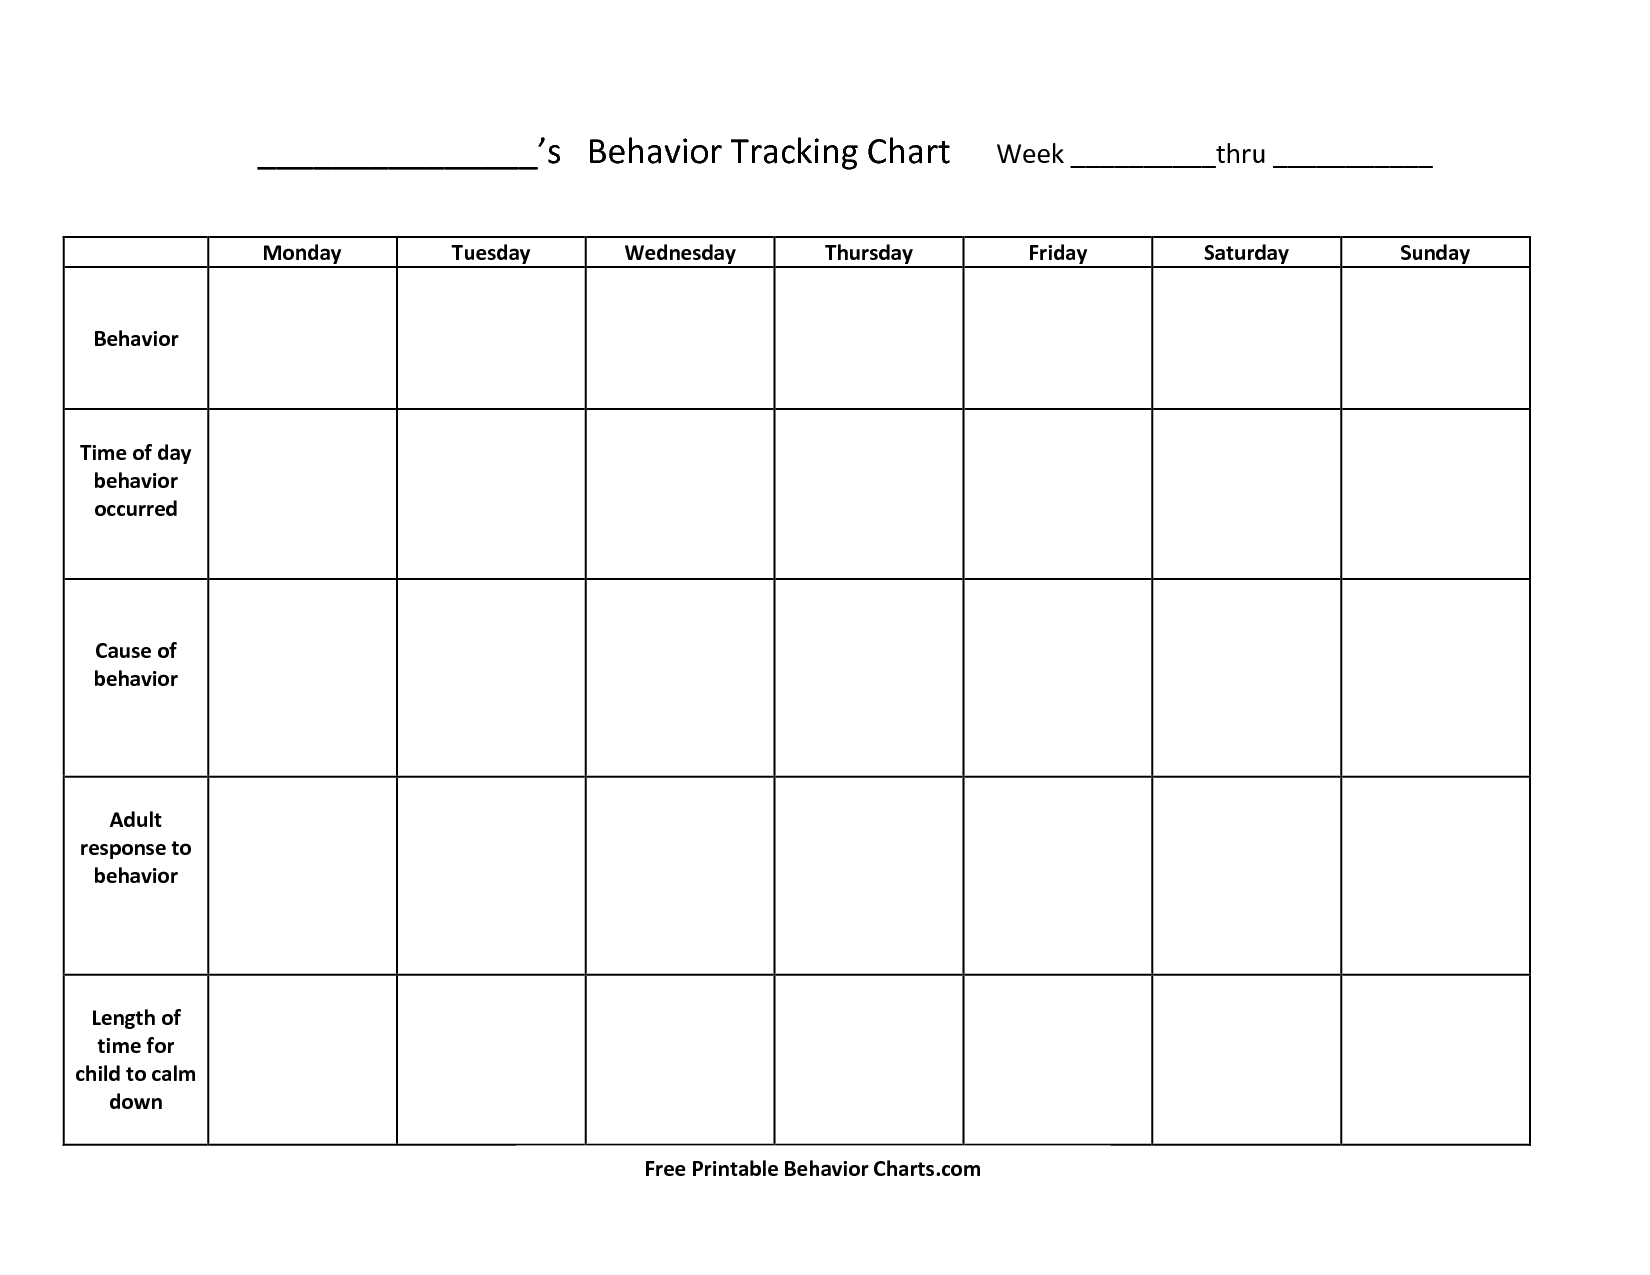 Free+Printable+Behavior+Charts+For+Teachers | Things To Try - Free Printable Charts For Classroom